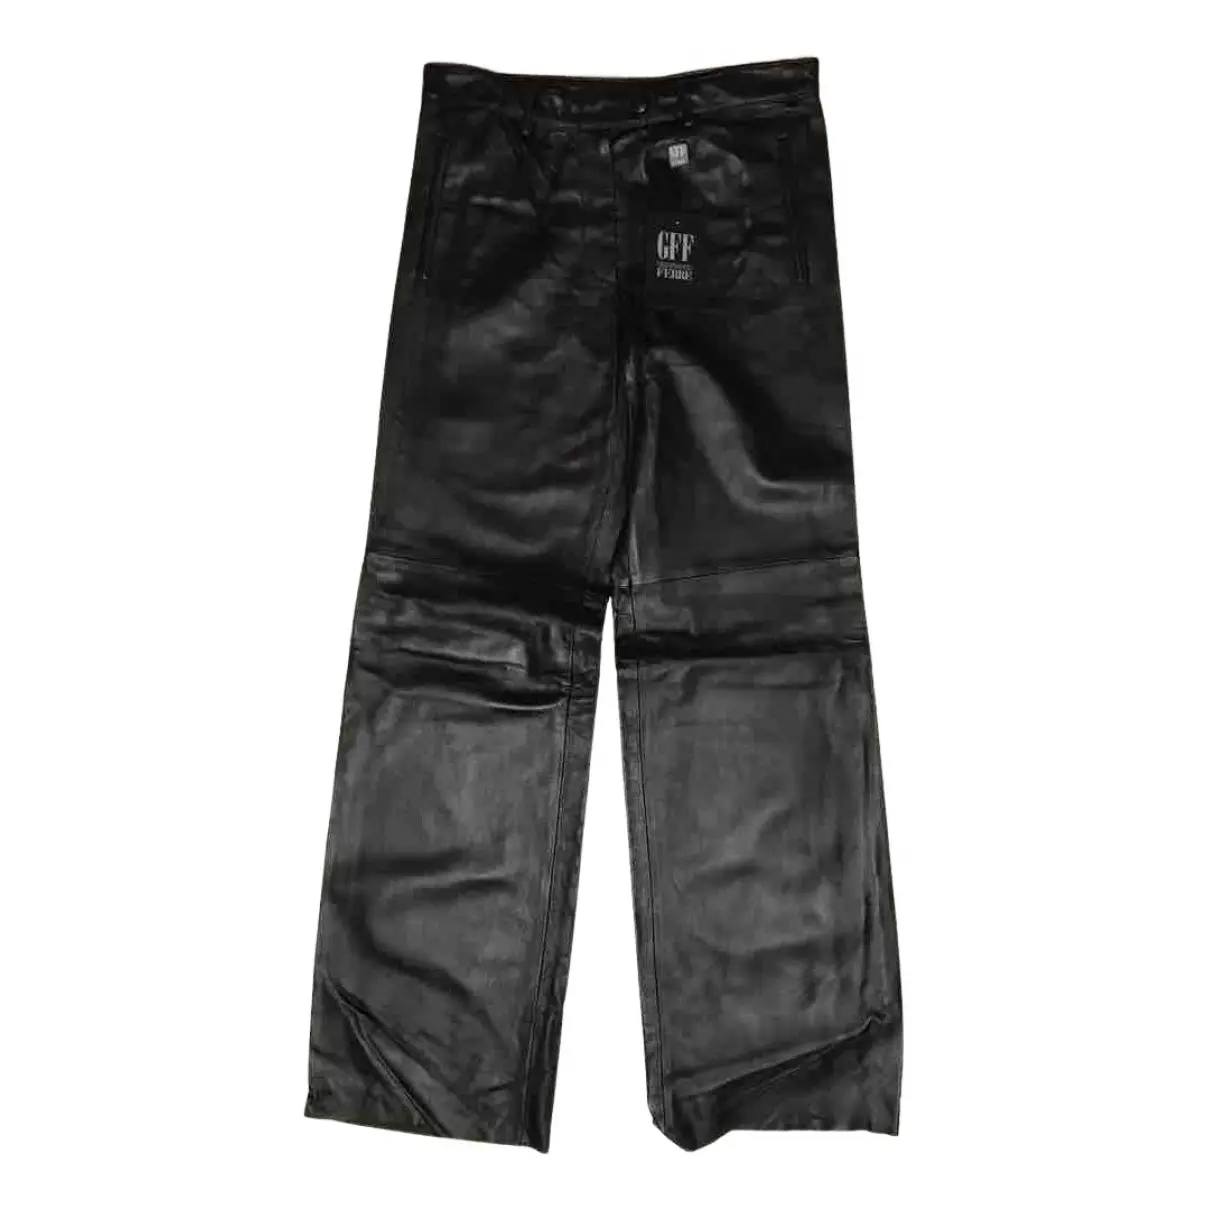 Leather trousers Gianfranco Ferré